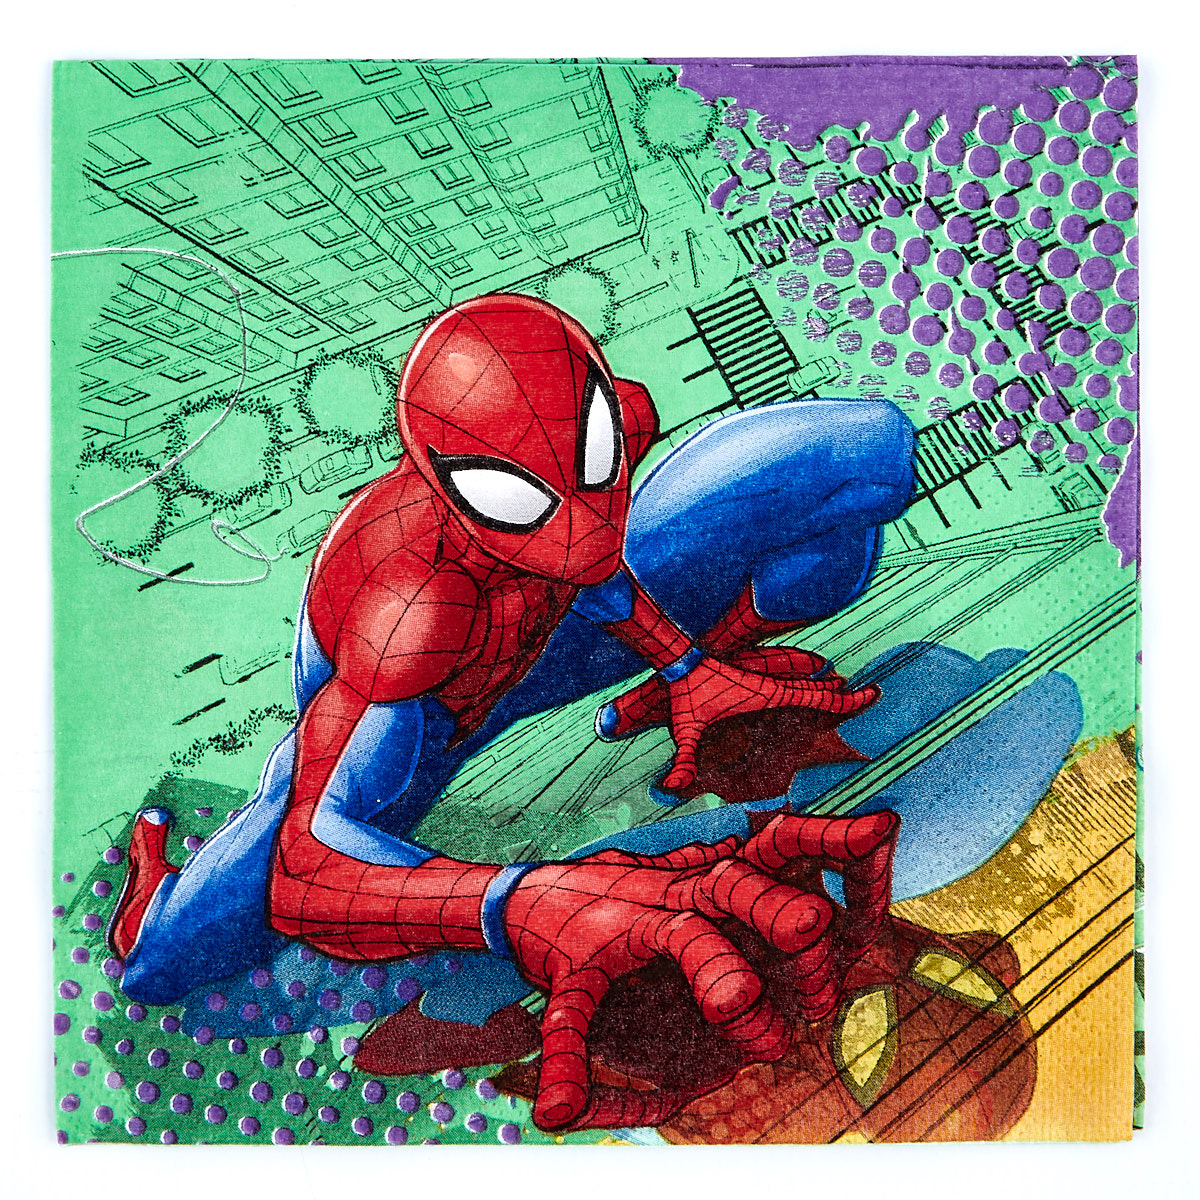 Marvel Spider-Man party Tableware Bundle - 16 Guests